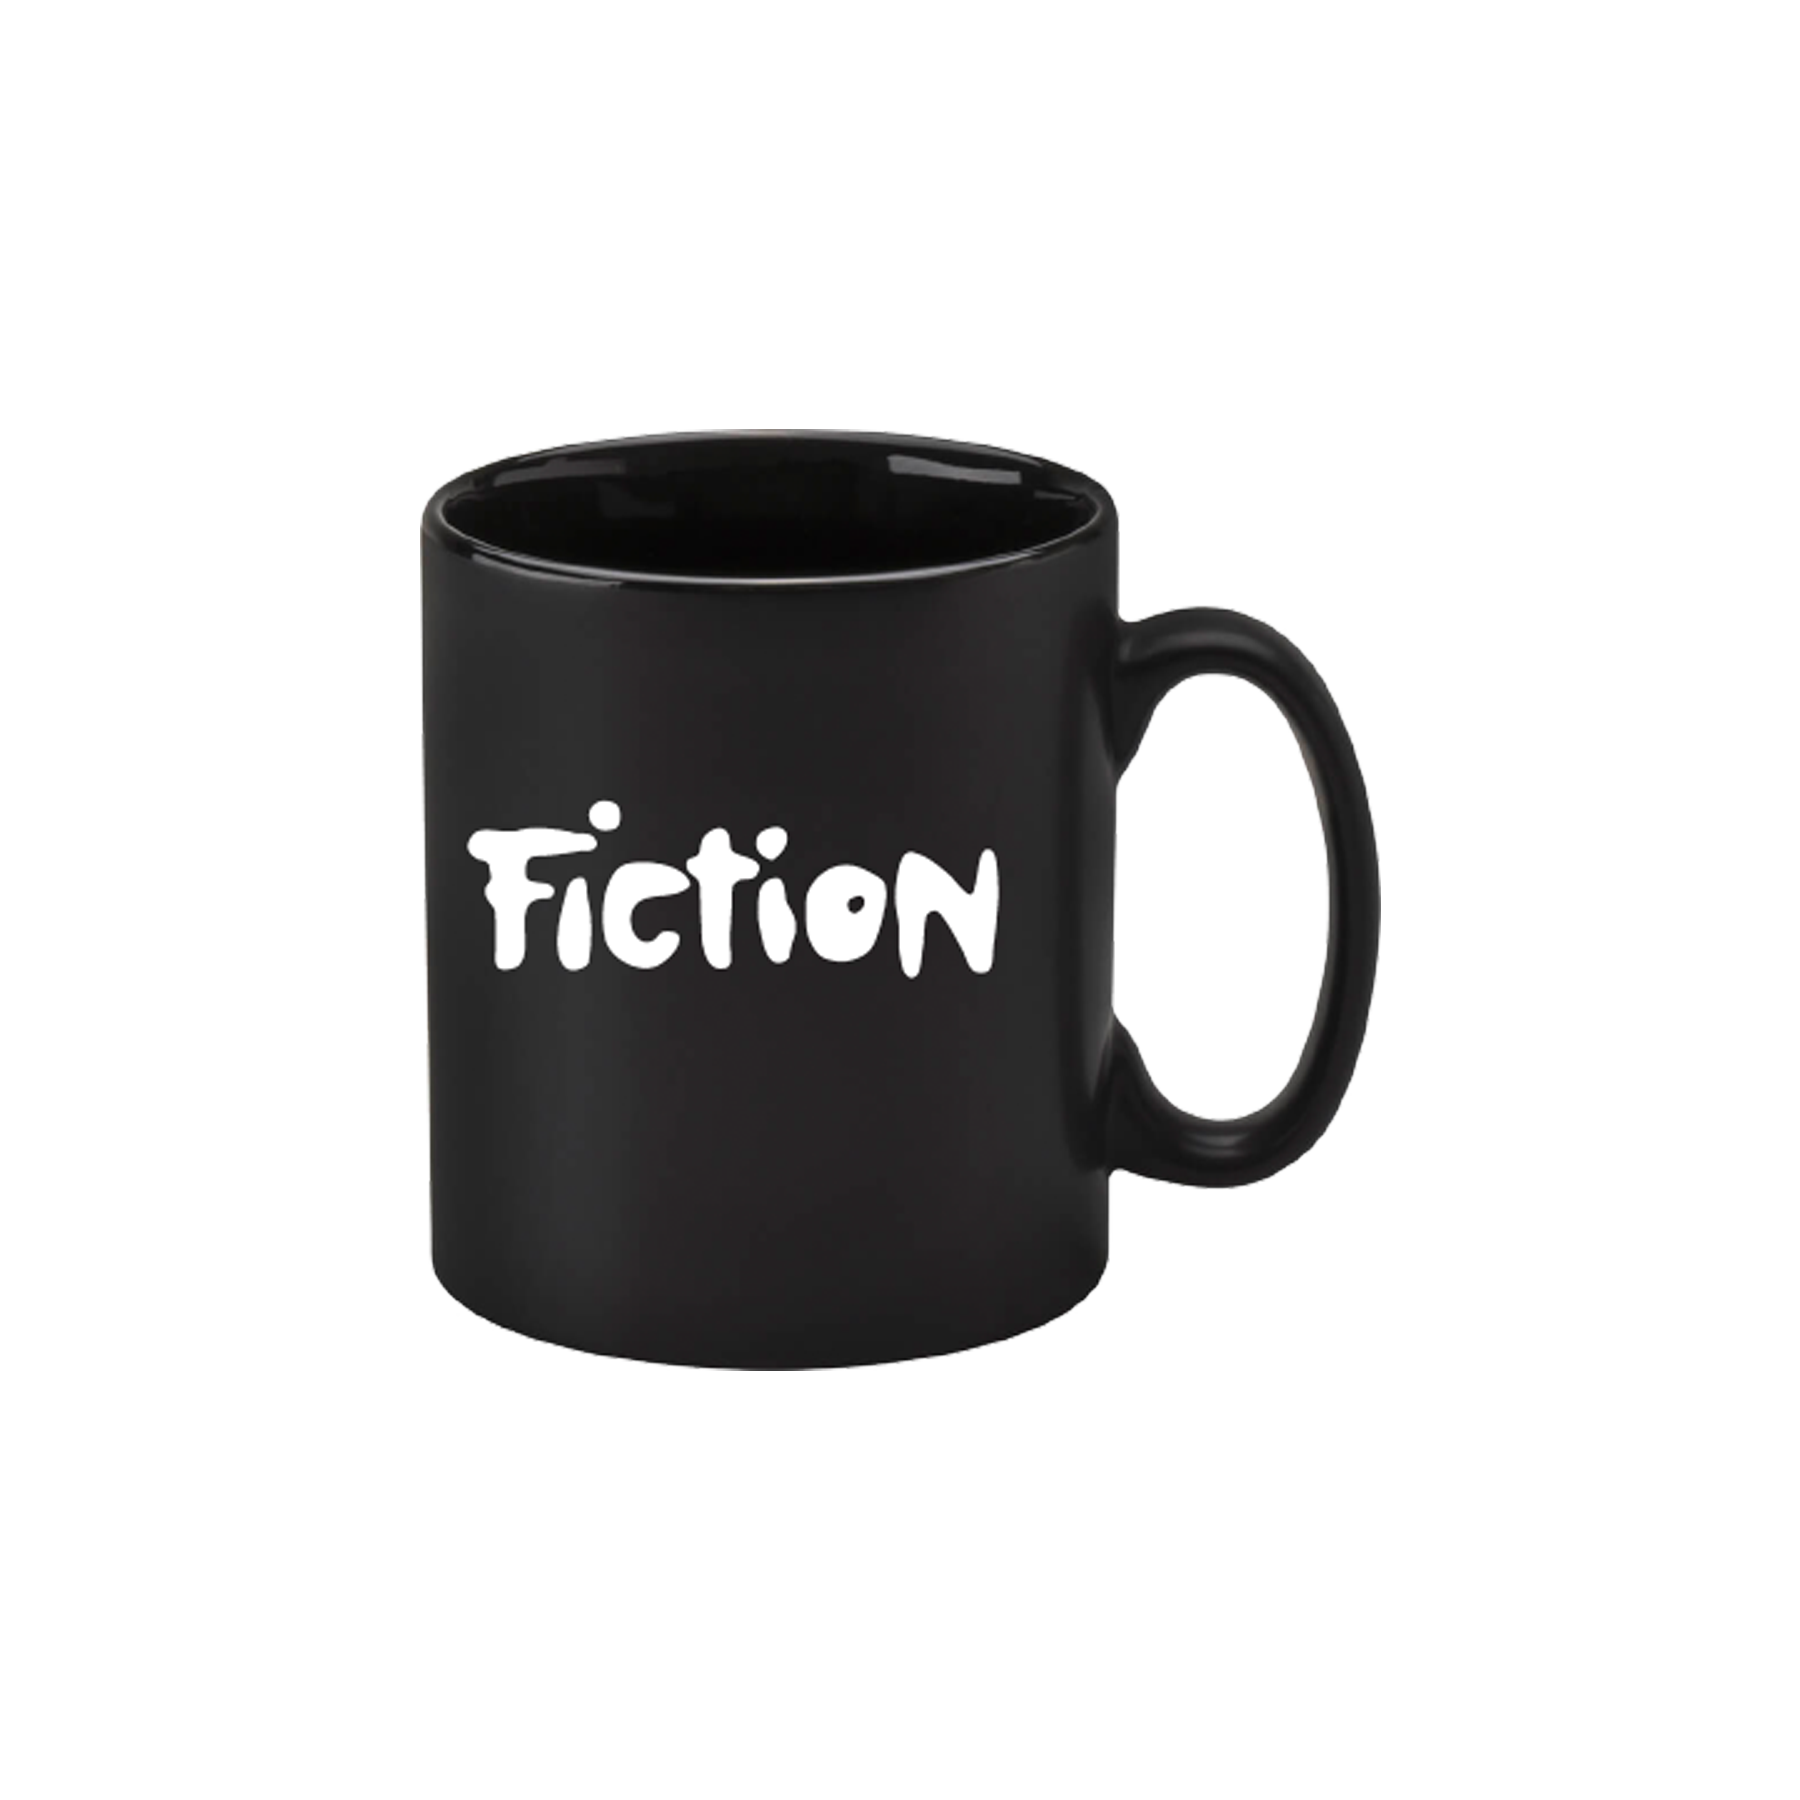 Fiction - Fiction Mug